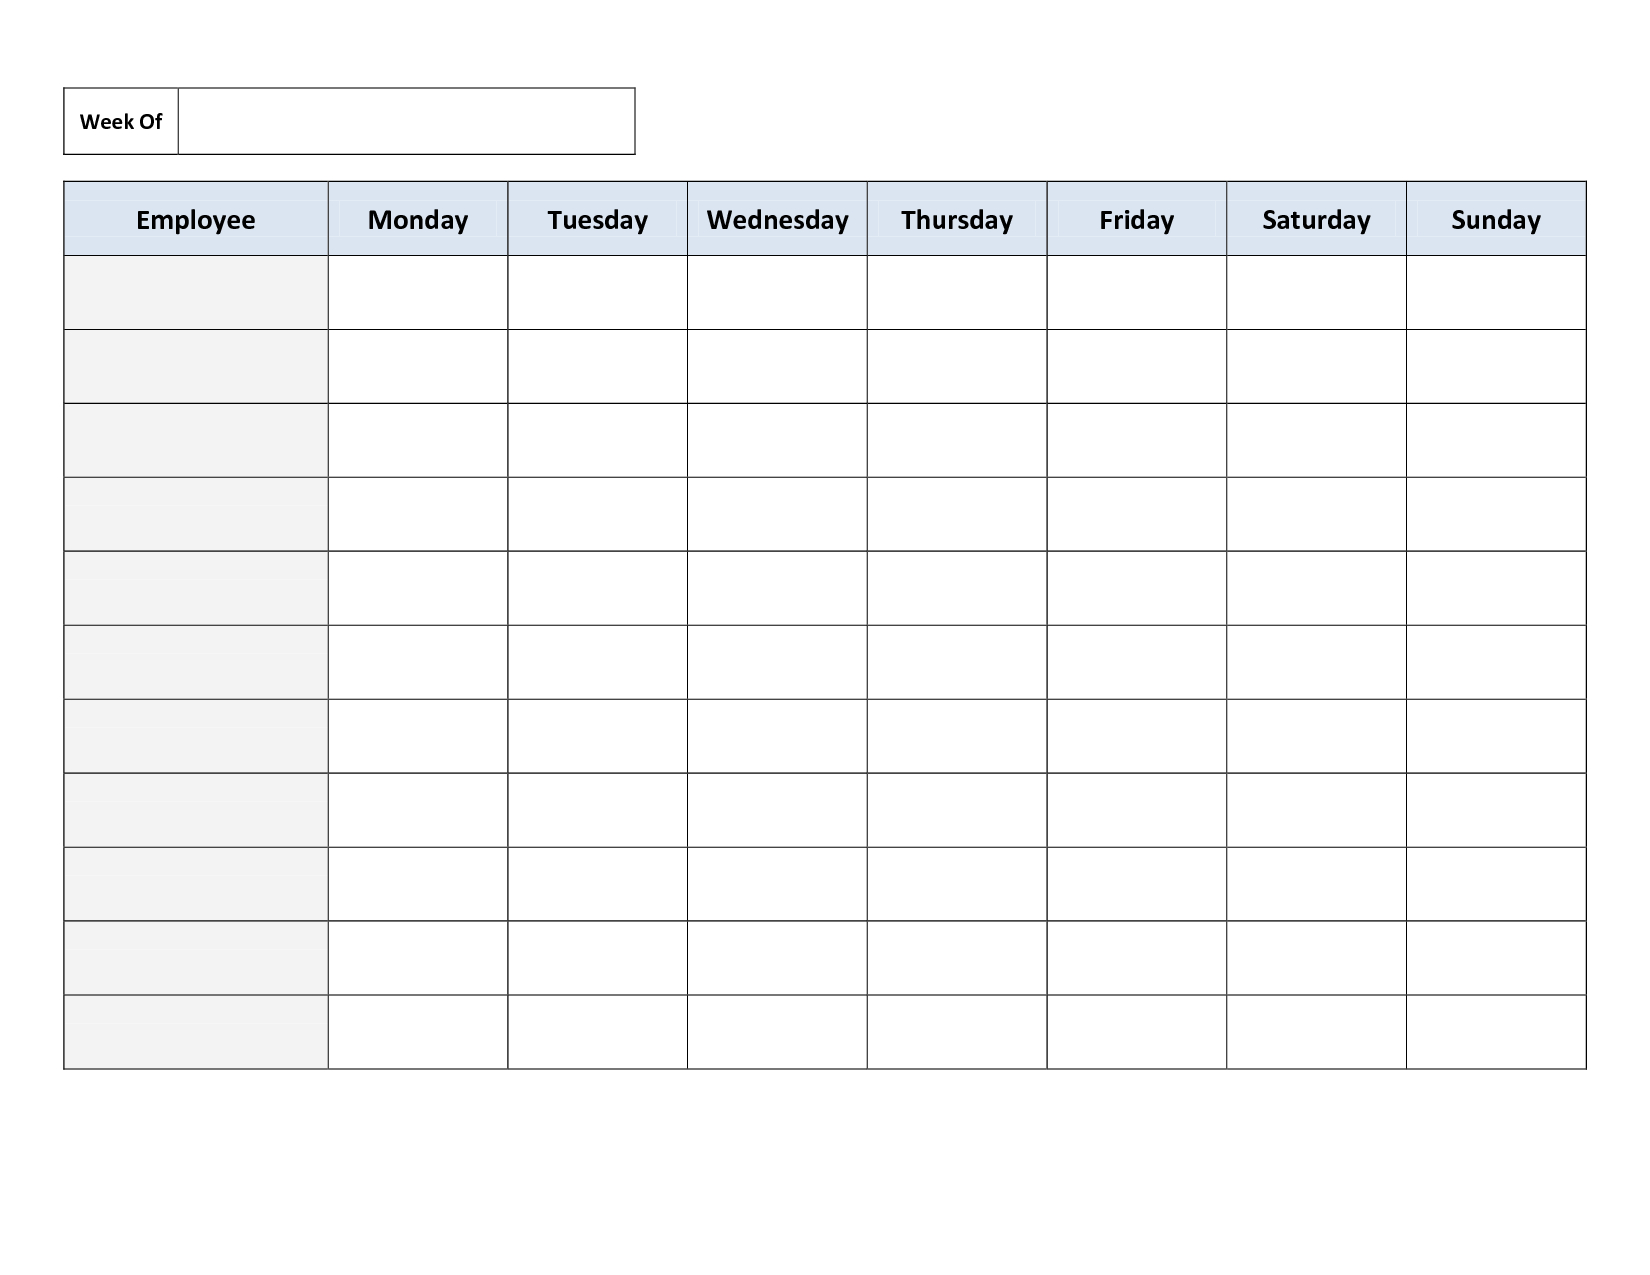 Free Printable Work Schedules | Weekly Employee Work Schedule - Free Printable Work Schedule Maker